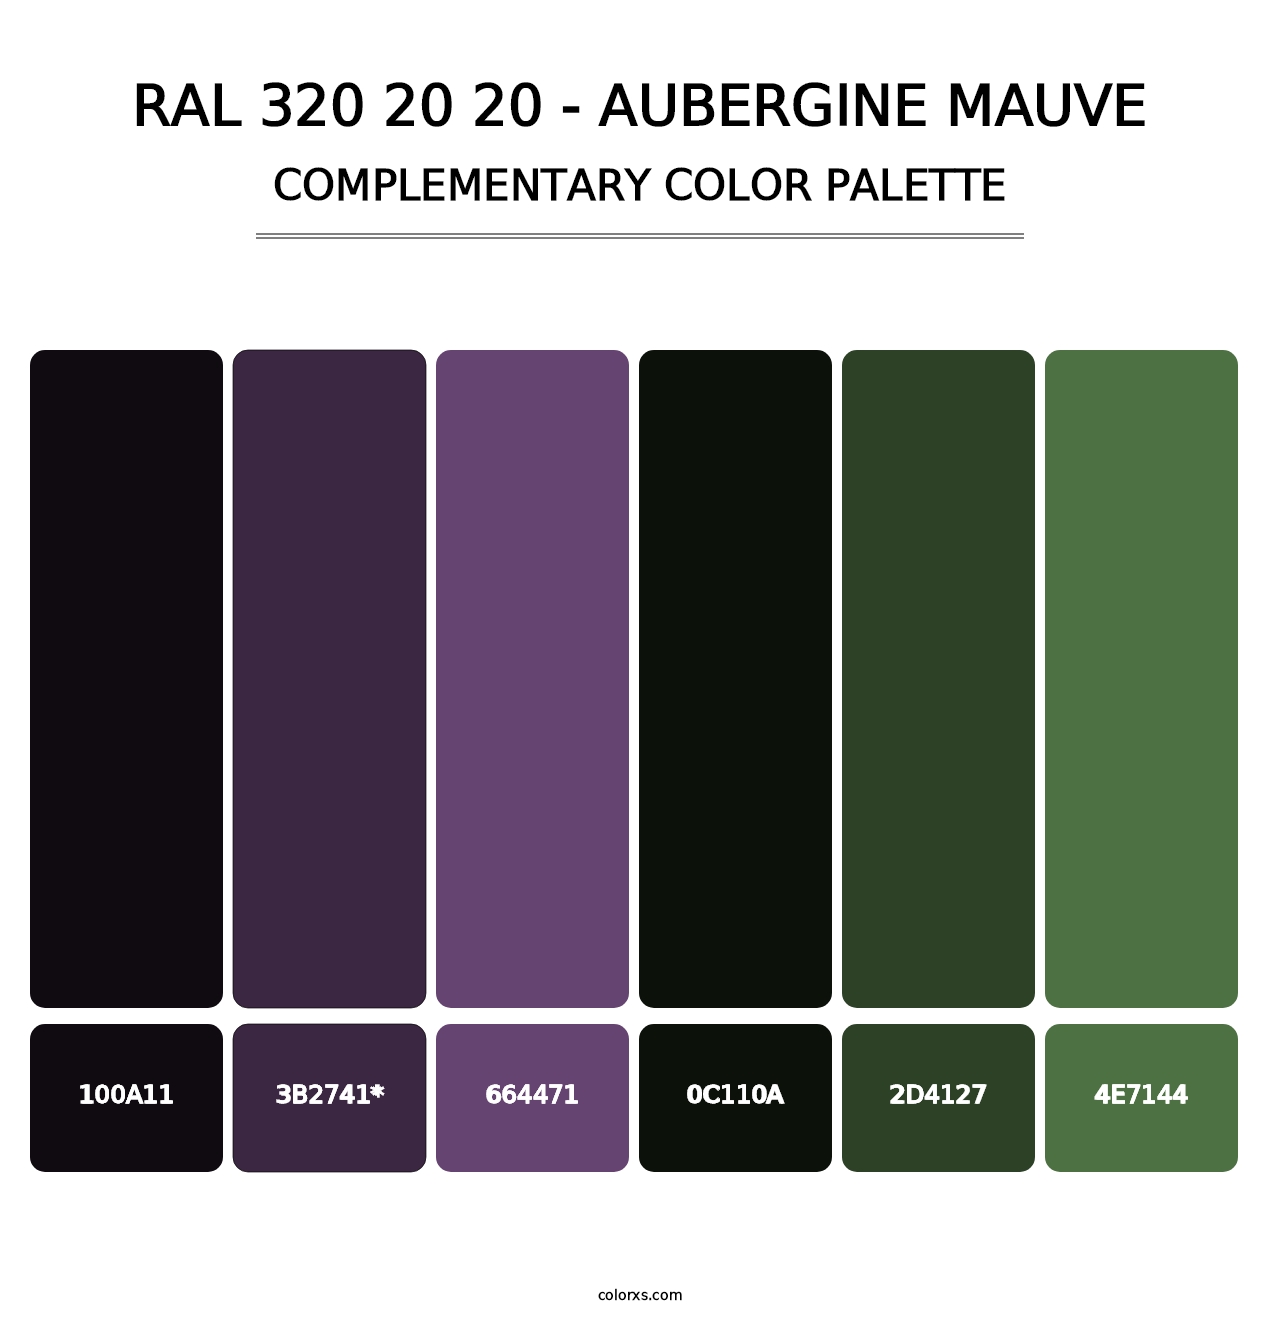 RAL 320 20 20 - Aubergine Mauve - Complementary Color Palette